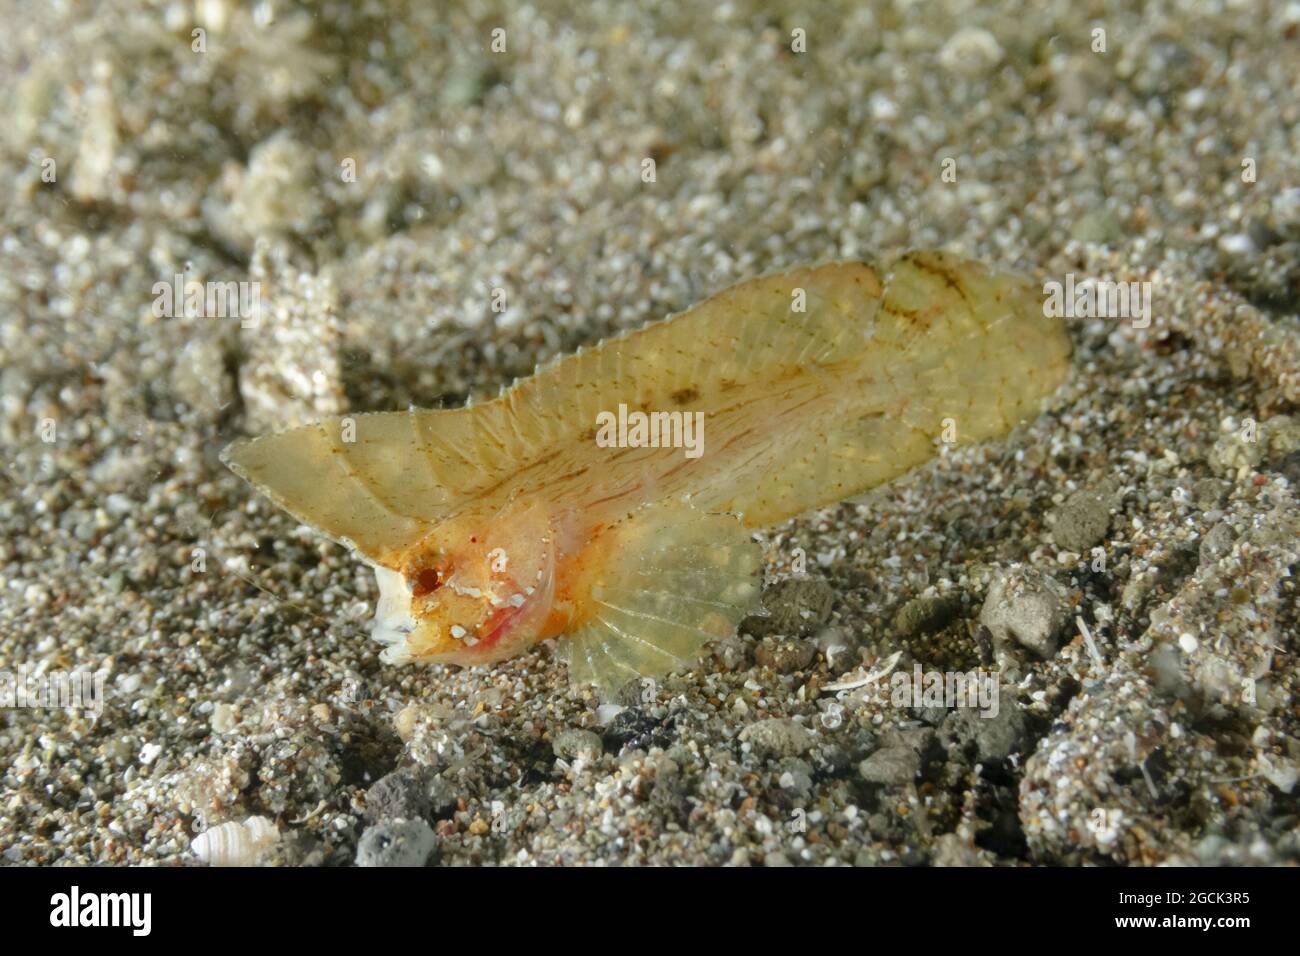 Closeup of tropical marine Ablabys taenianotus or Cockatoo waspfish swimming near sandy bottom in ocean water Stock Photo